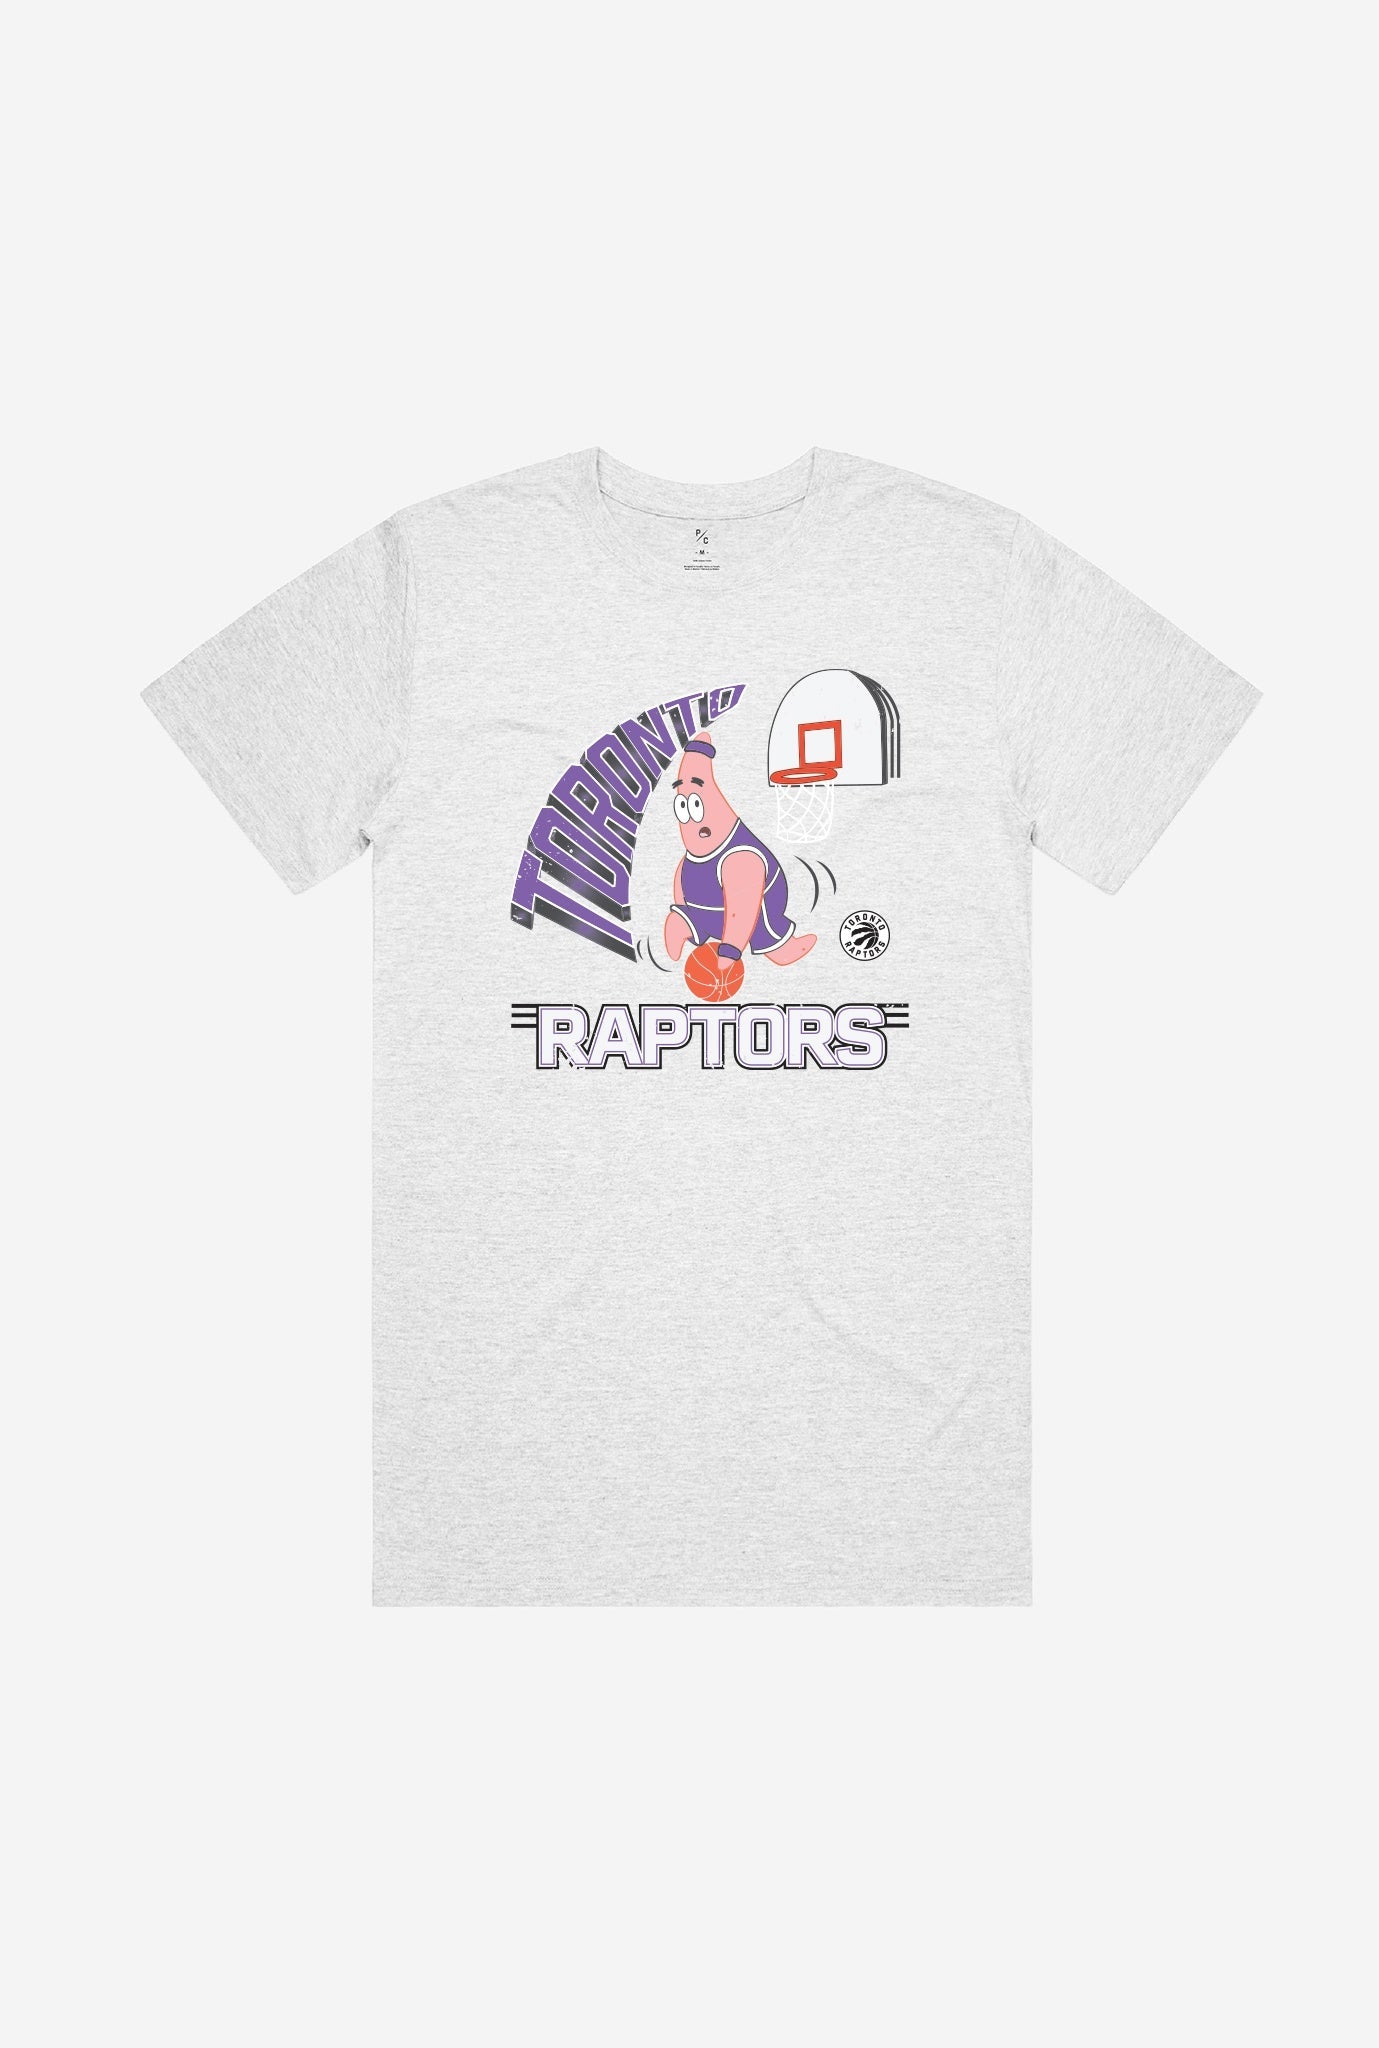 Toronto Raptors Patrick T-Shirt - Ash